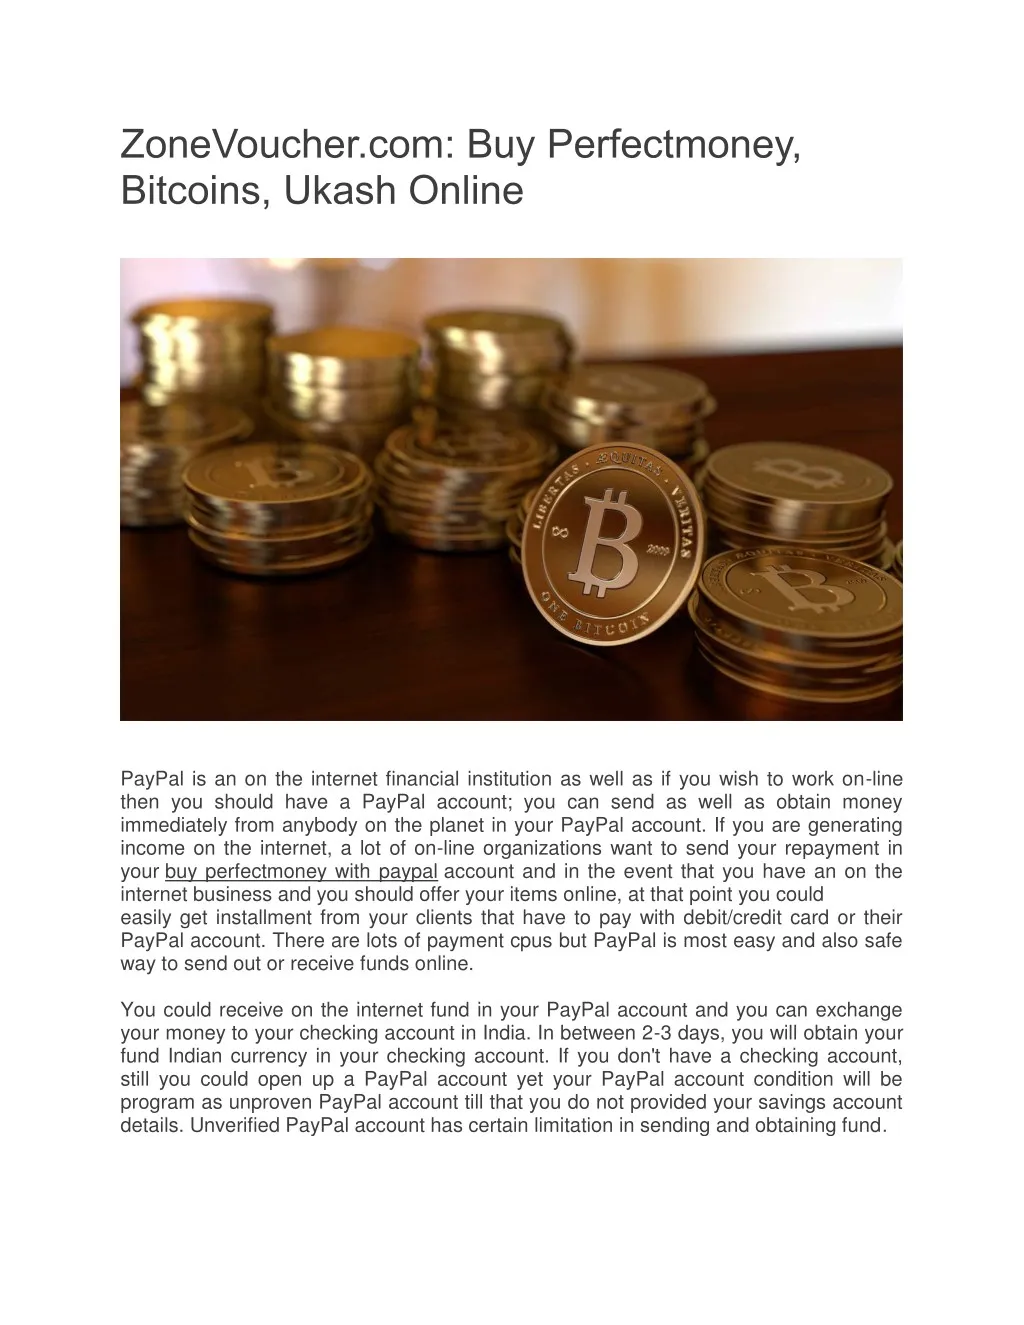 zonevoucher com buy perfectmoney bitcoins ukash